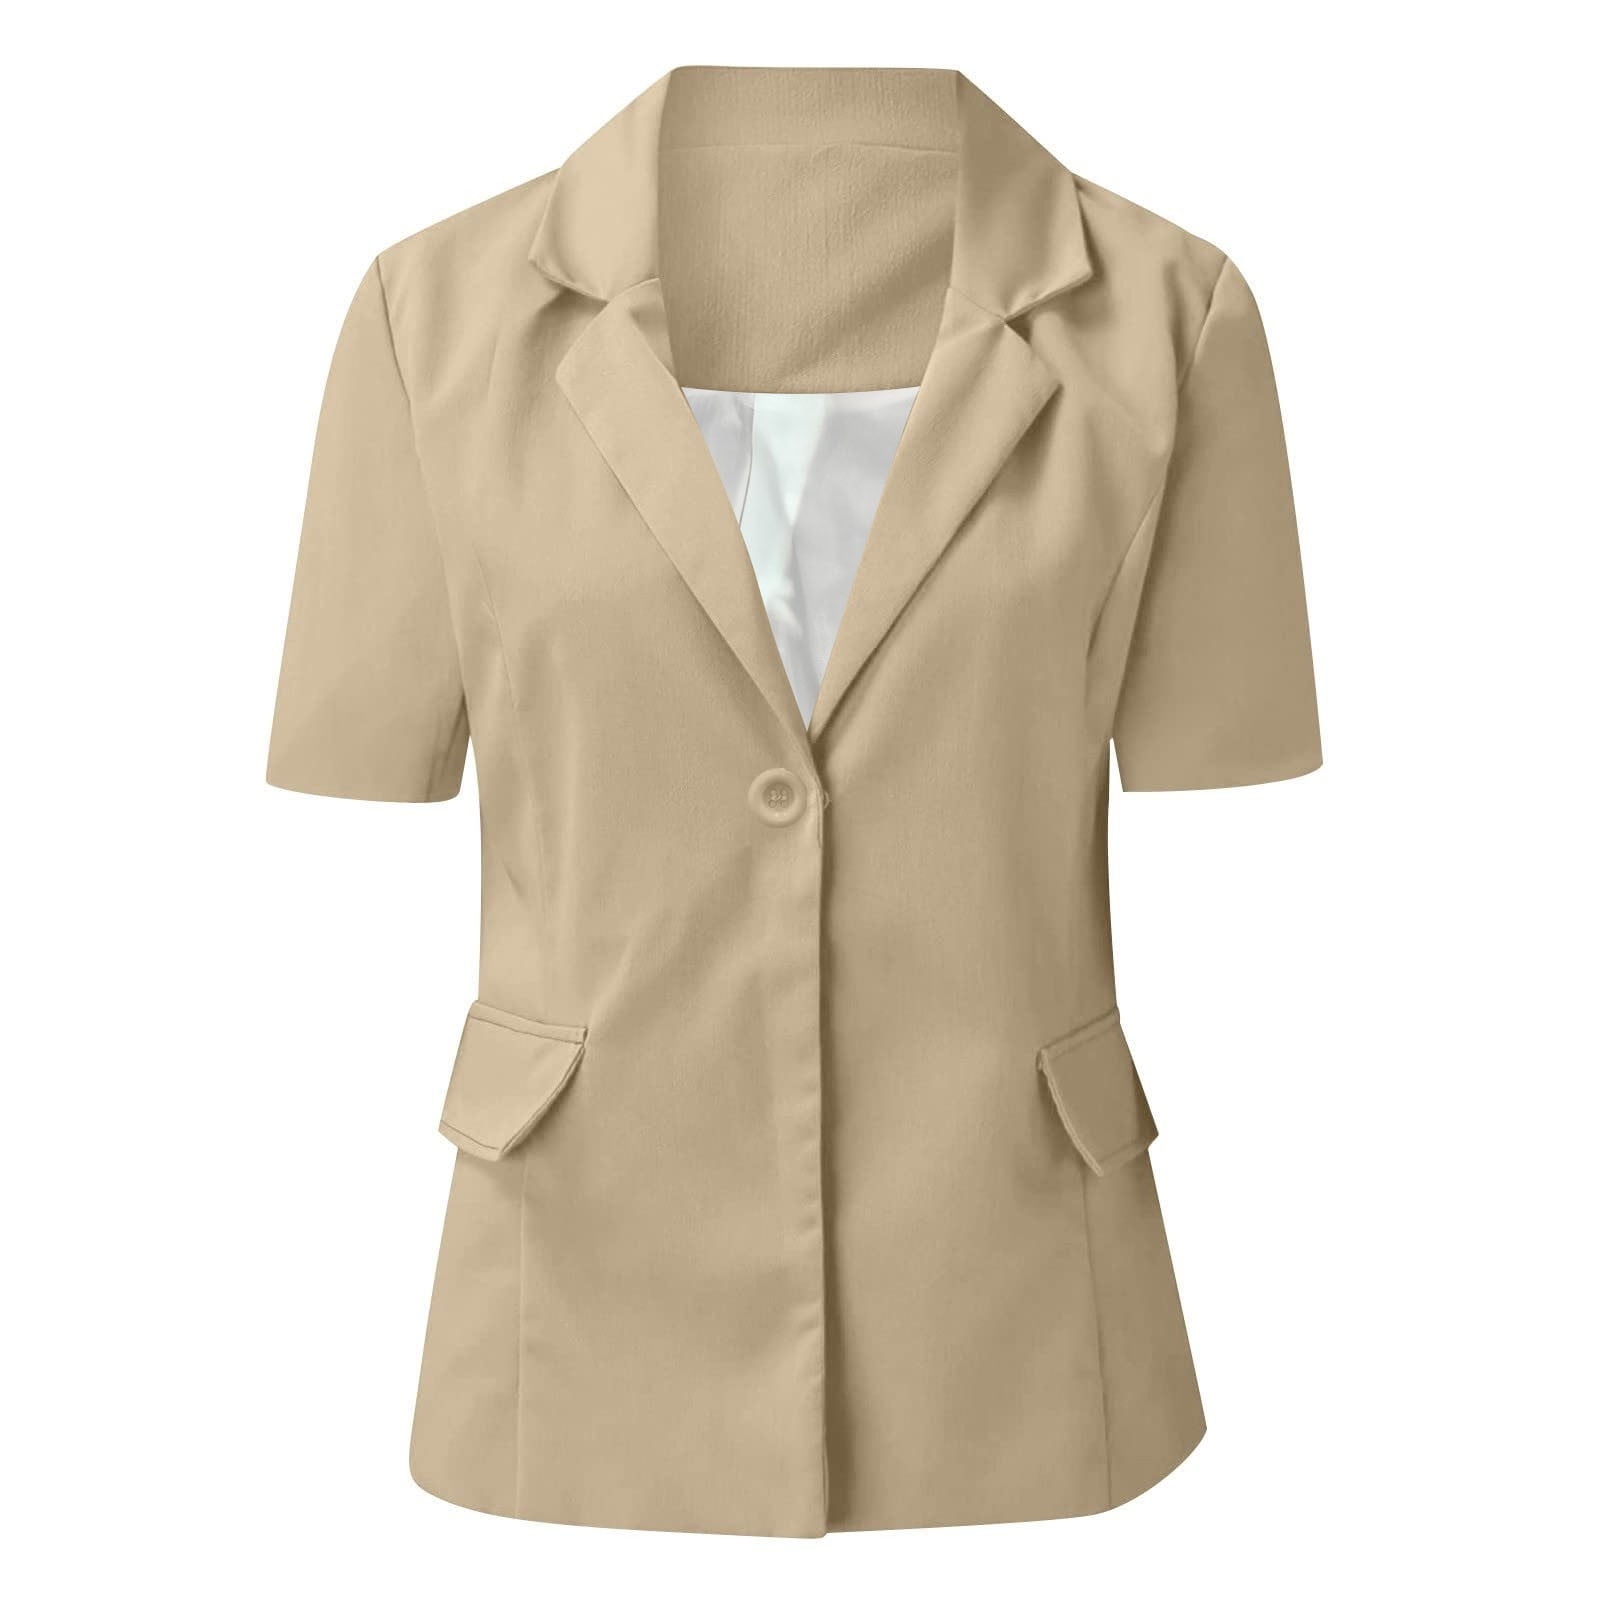 Olyvenn Sales Women's Fashion Solid Button Suit Coat Lapel Long Sleeve  Hatless Casual Coat/Jacket Oversized Work Office Business Blazer for Teen  Girls Love Blue 12 